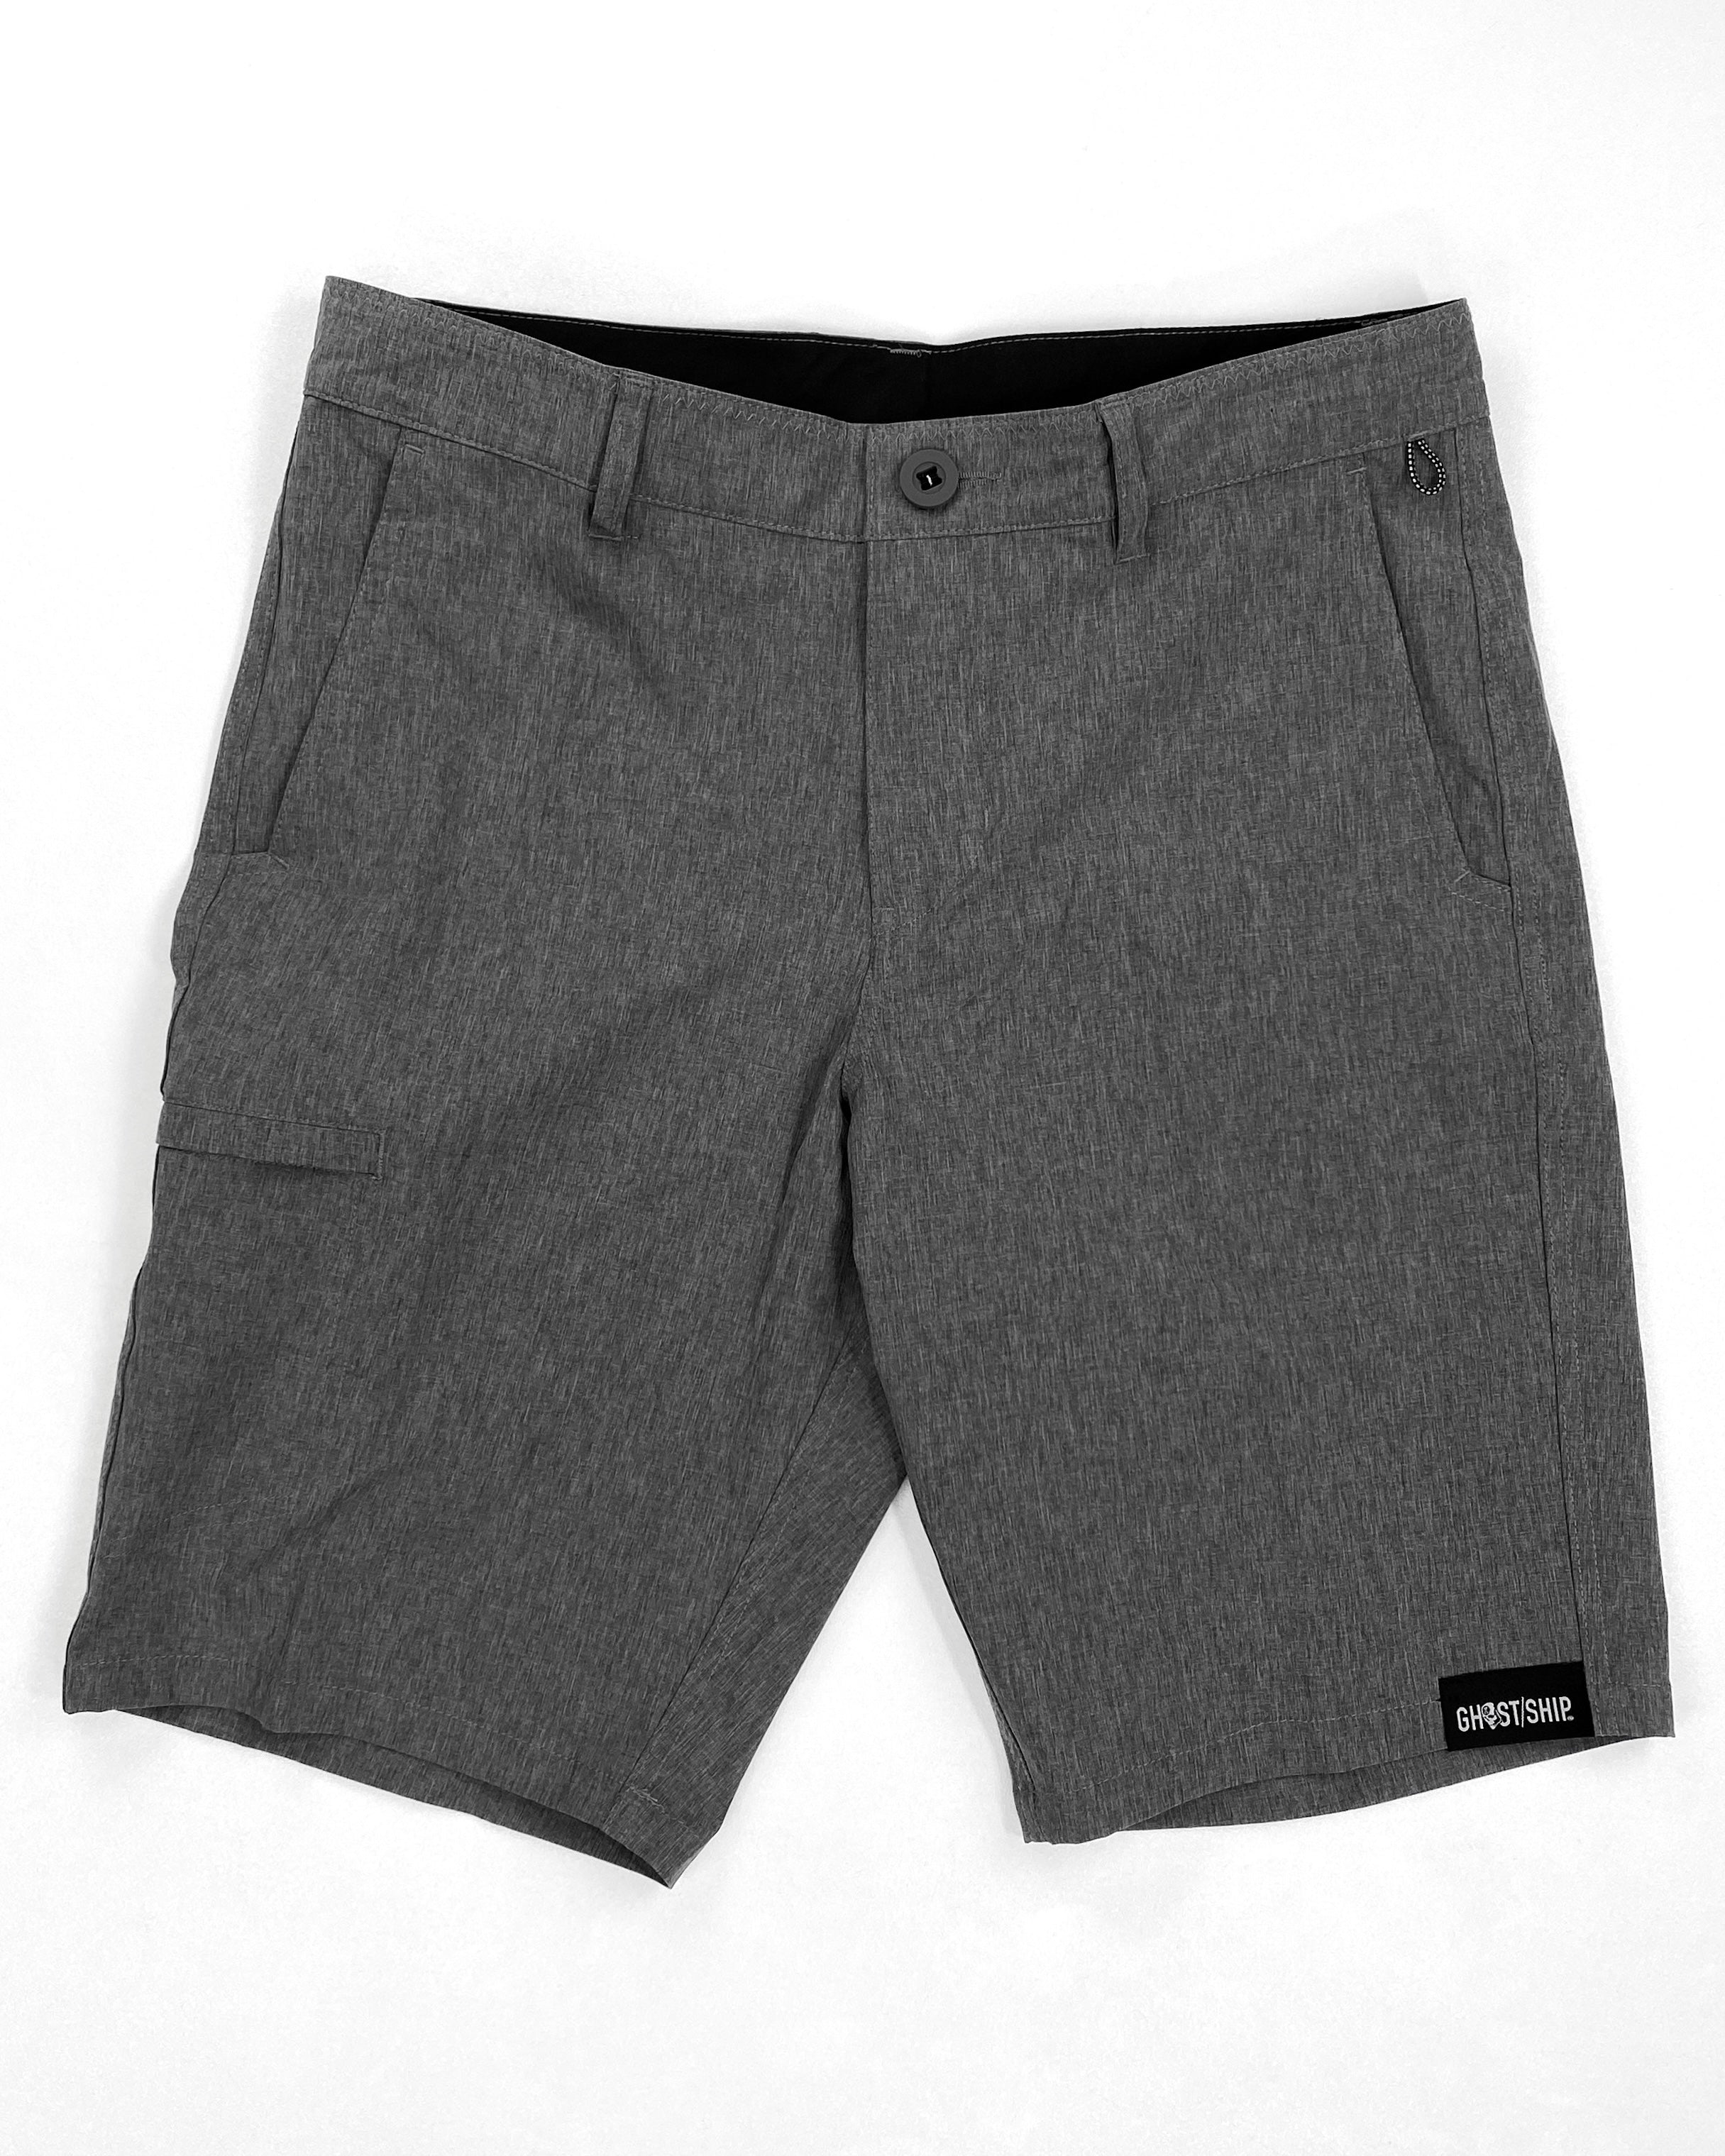 Hybrid Shorts - Charcoal - GHOSTSHIP.Supply